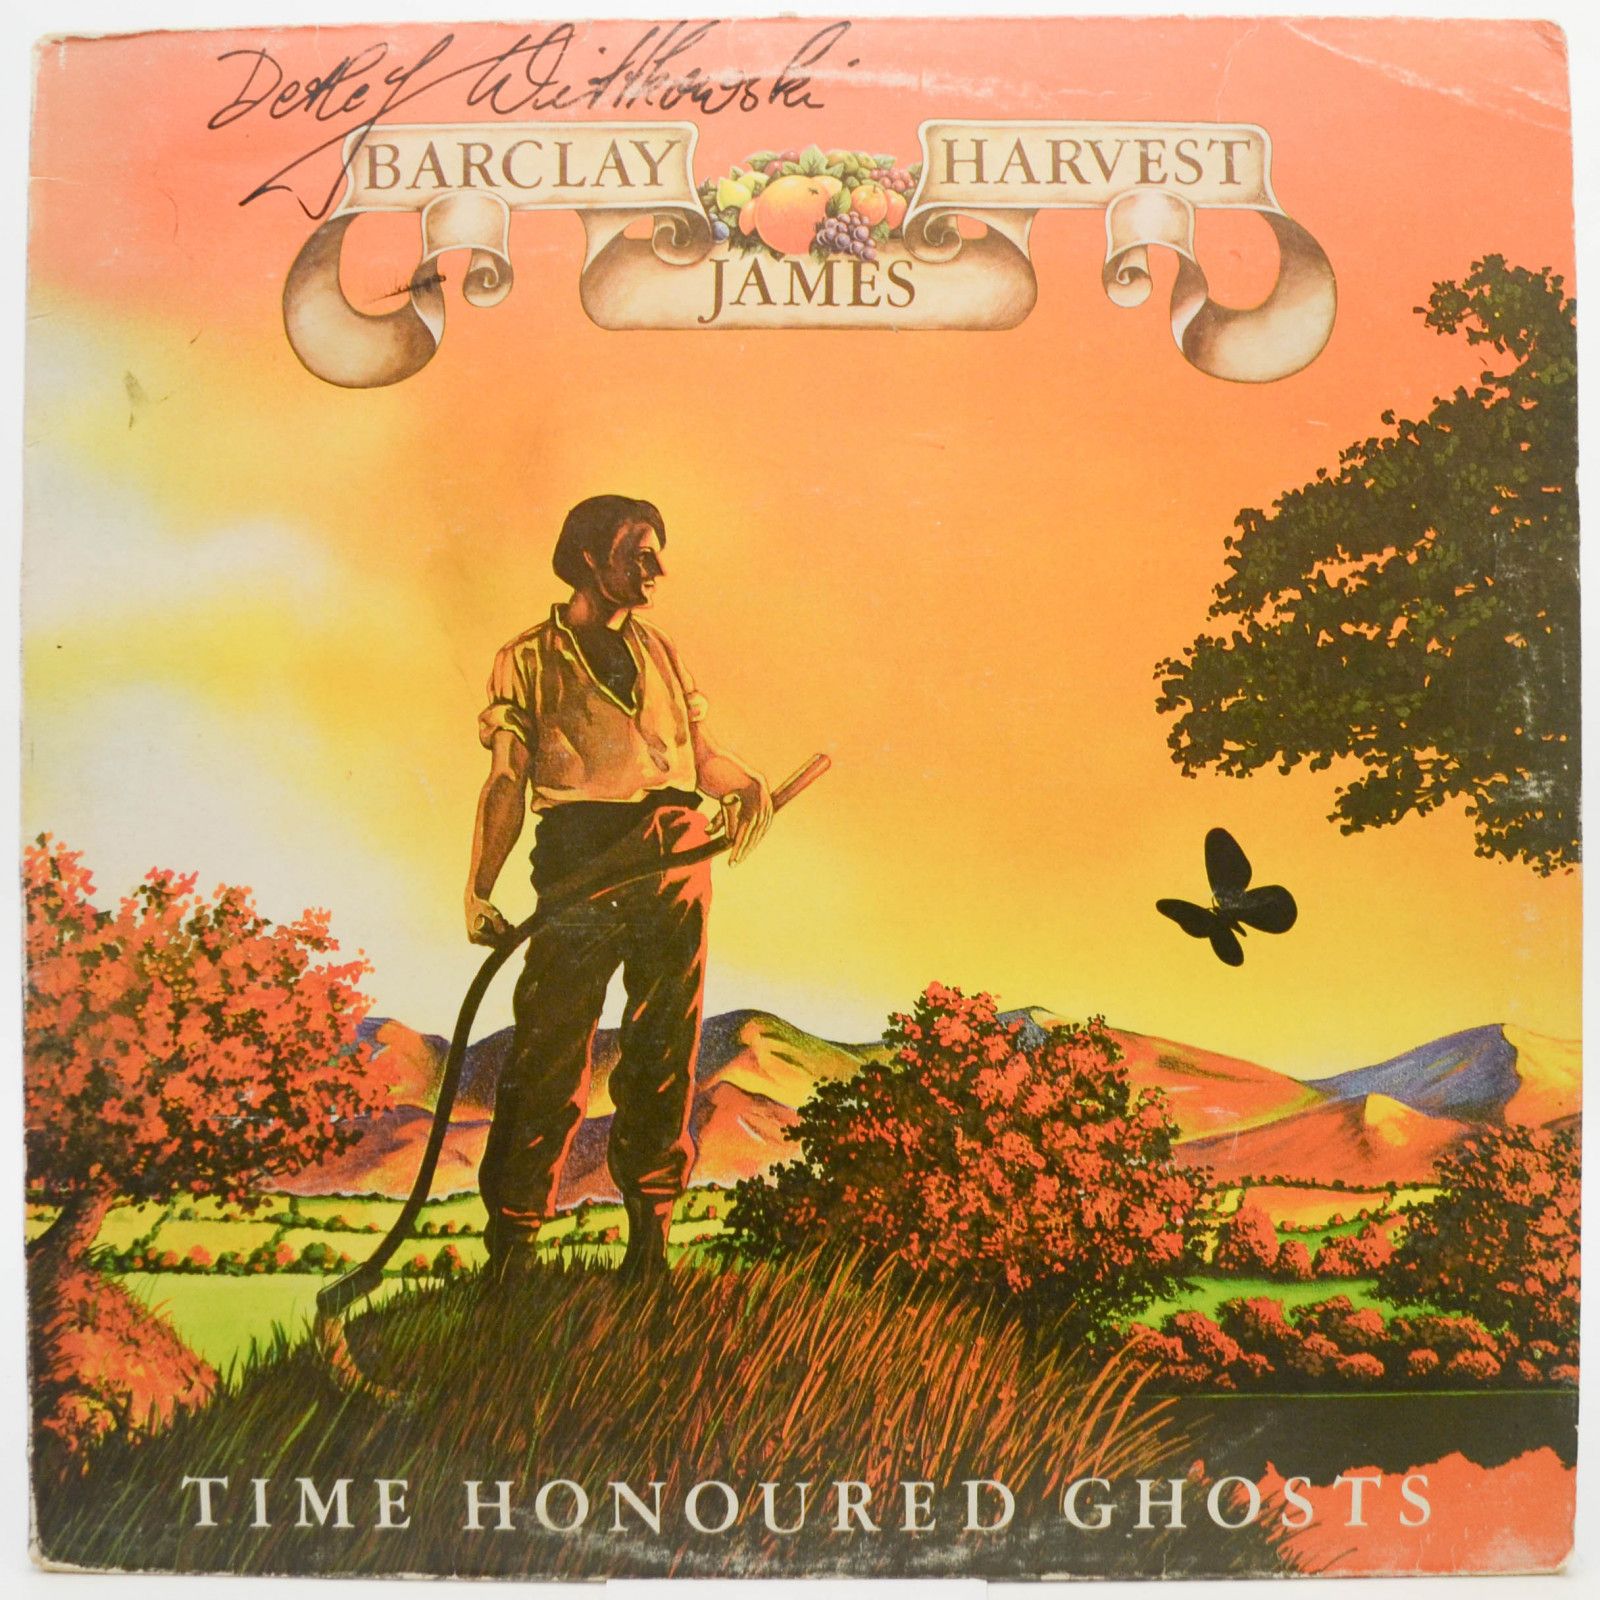 Barclay James Harvest — Time Honoured Ghosts (1-st, UK), 1975